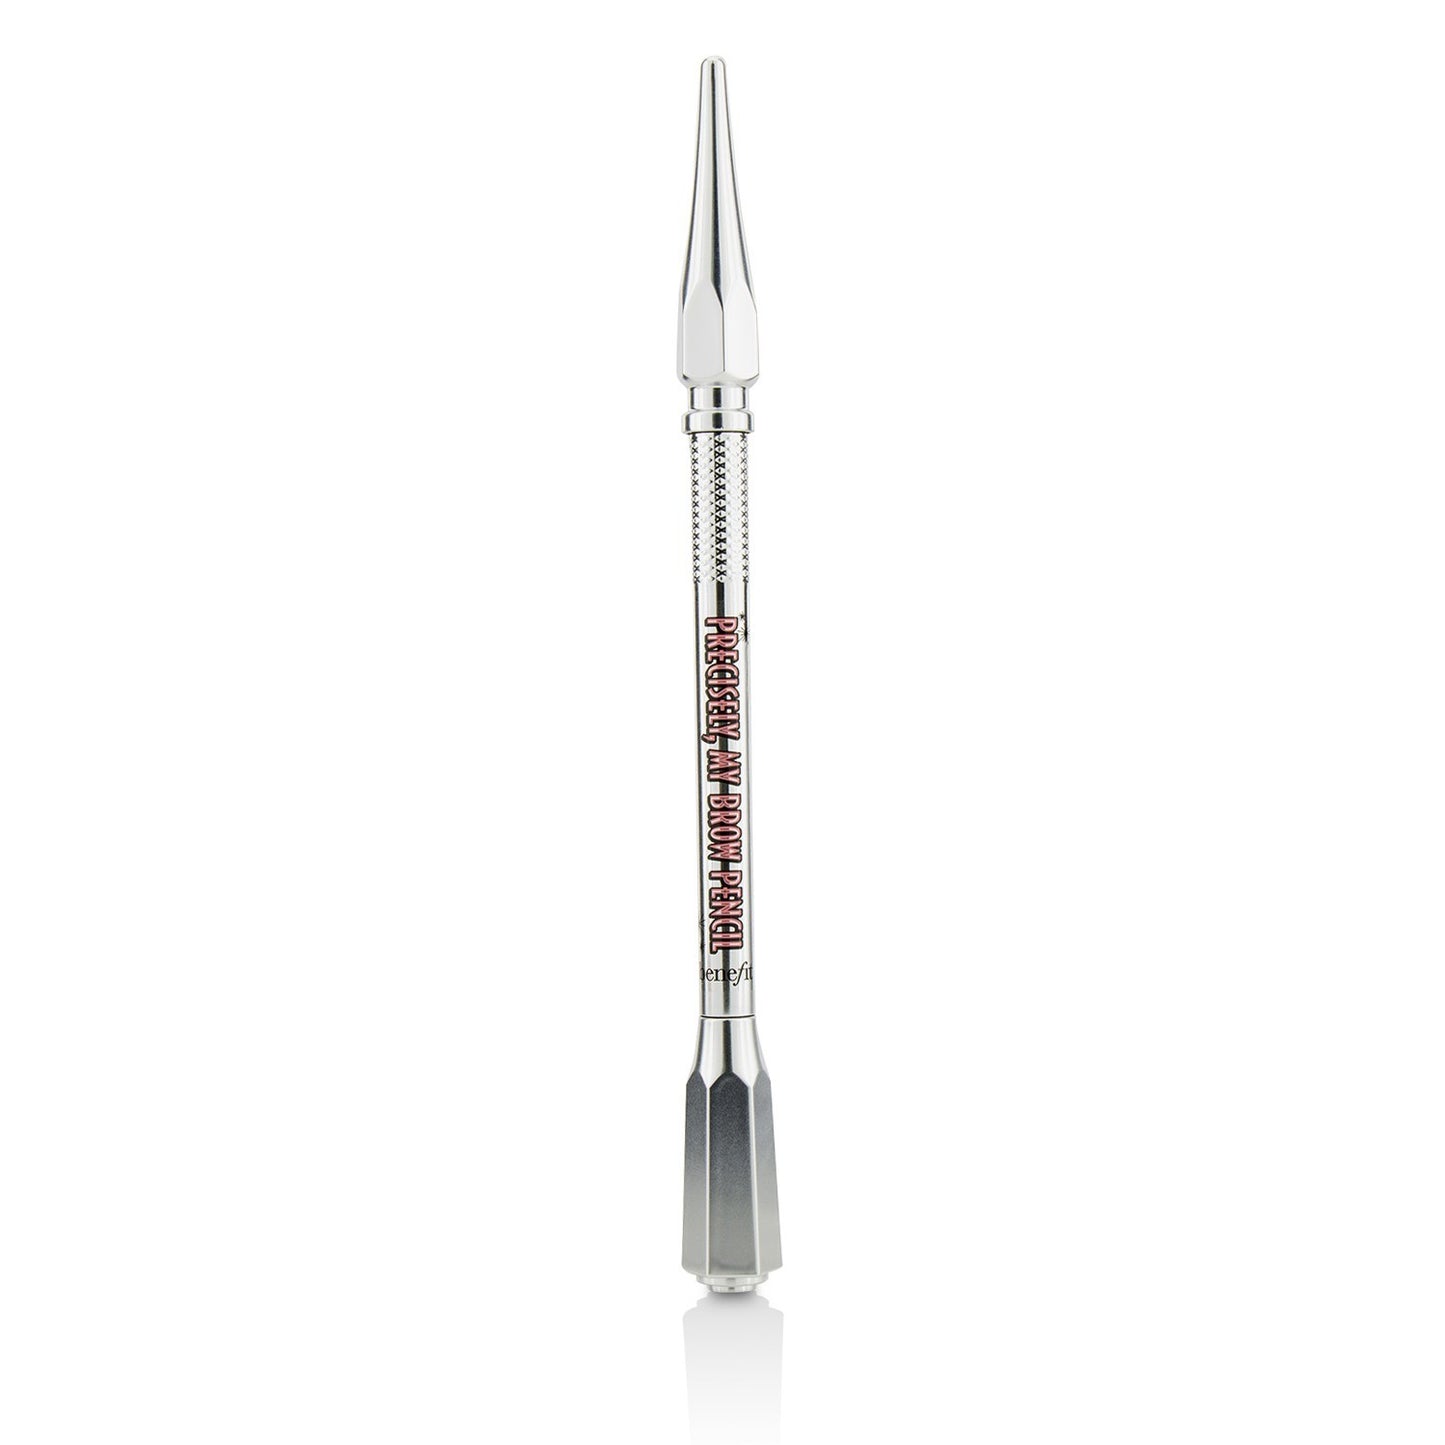 BENEFIT - Precisely My Brow Pencil (Ultra Fine Brow Defining Pencil) - # 3 (Medium) BM21 / 071323 0.08g/0.002oz